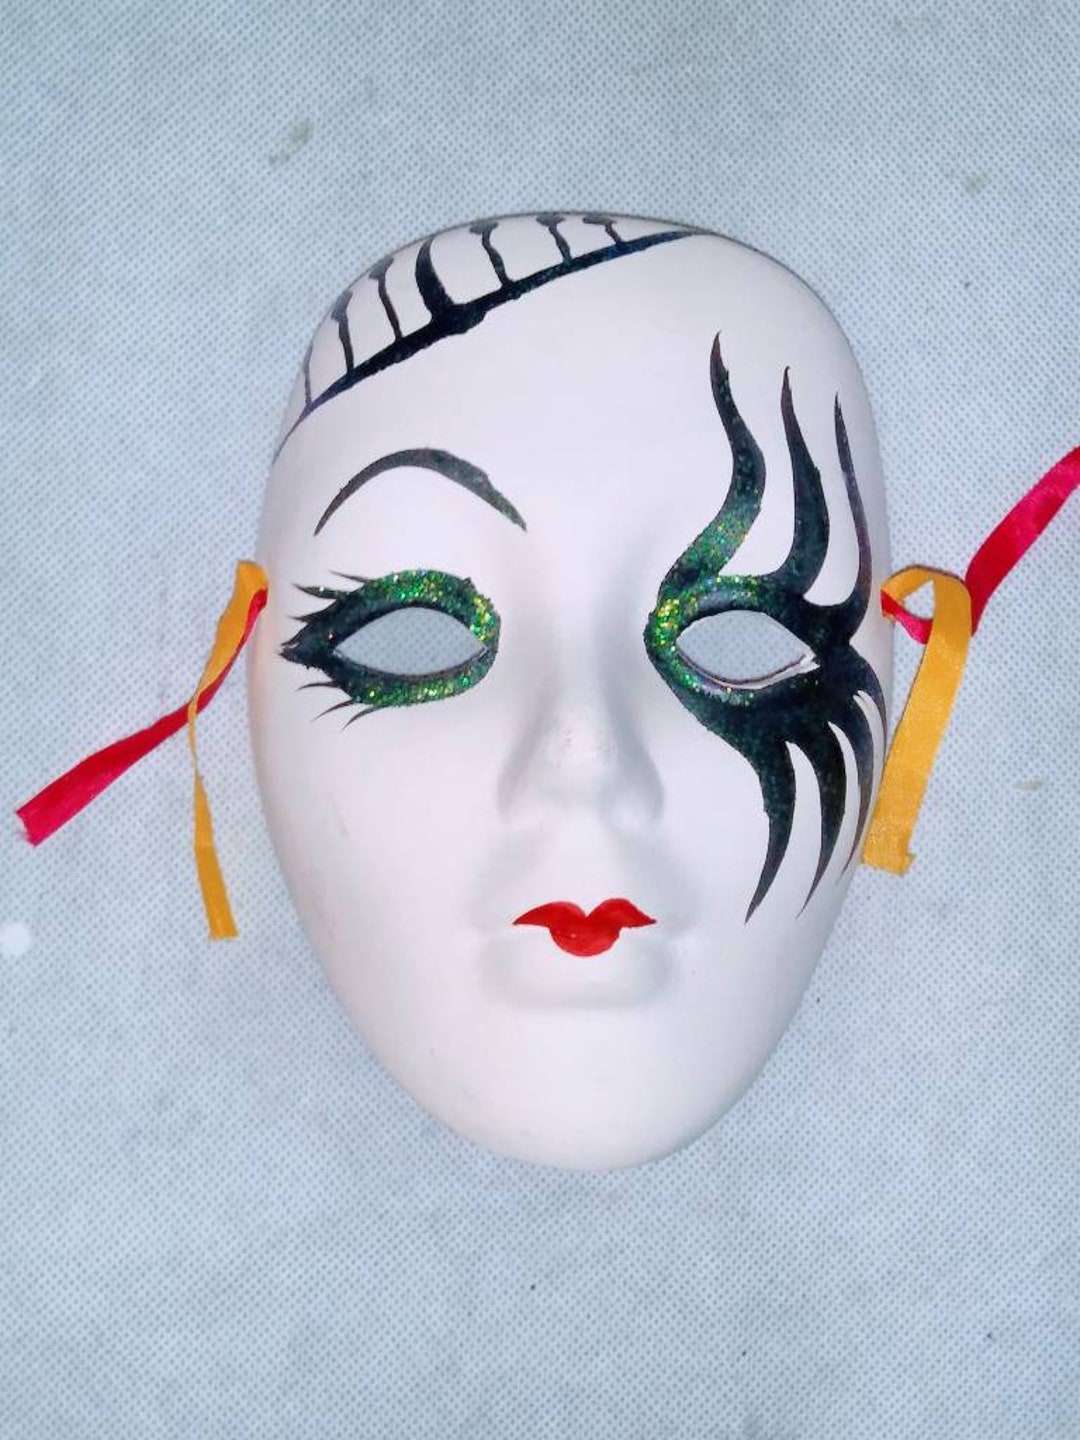 Vintage Hand Painted Ceramic Mardi Gras Masquerade Ball Mask Wall ...